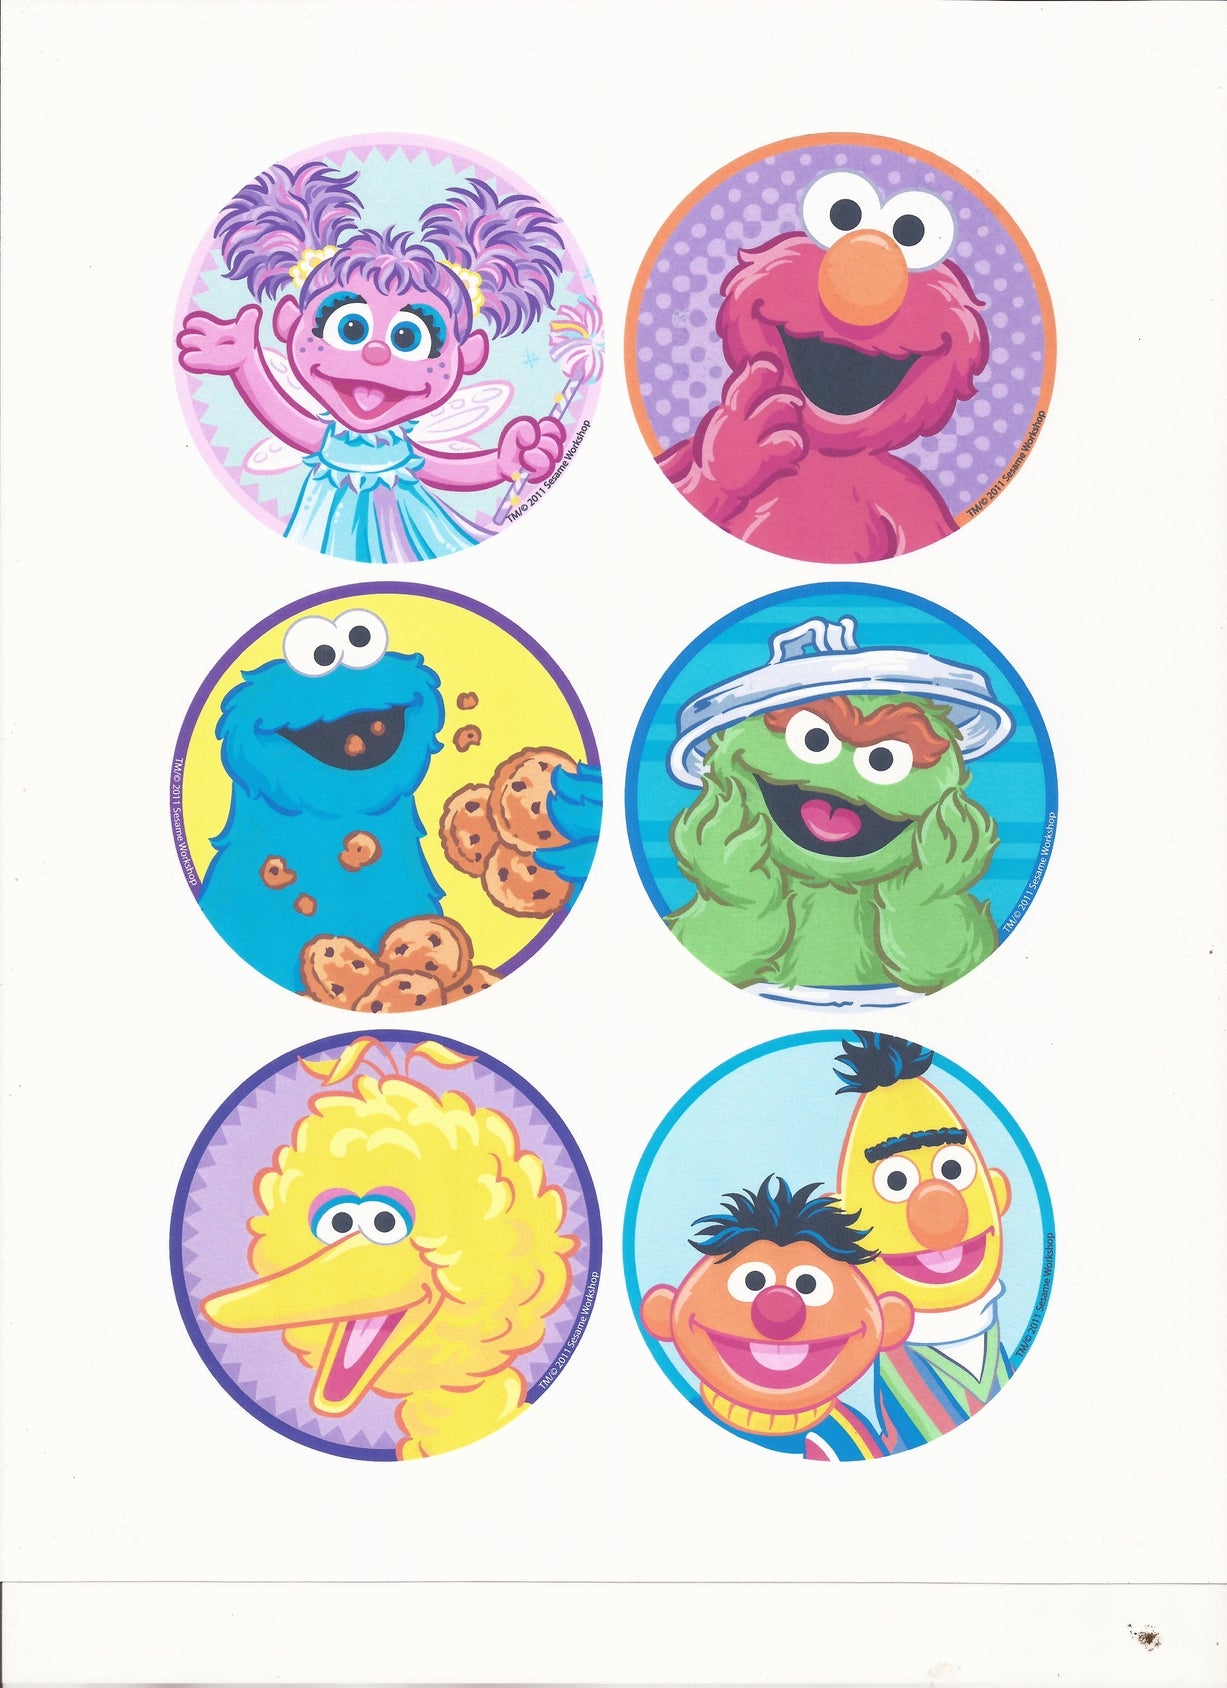 Sesame Street Big Bird Elmo Cookie Monster Abby Cadabby Bert Ernie Edible Cupcake Topper Images ABPID04254